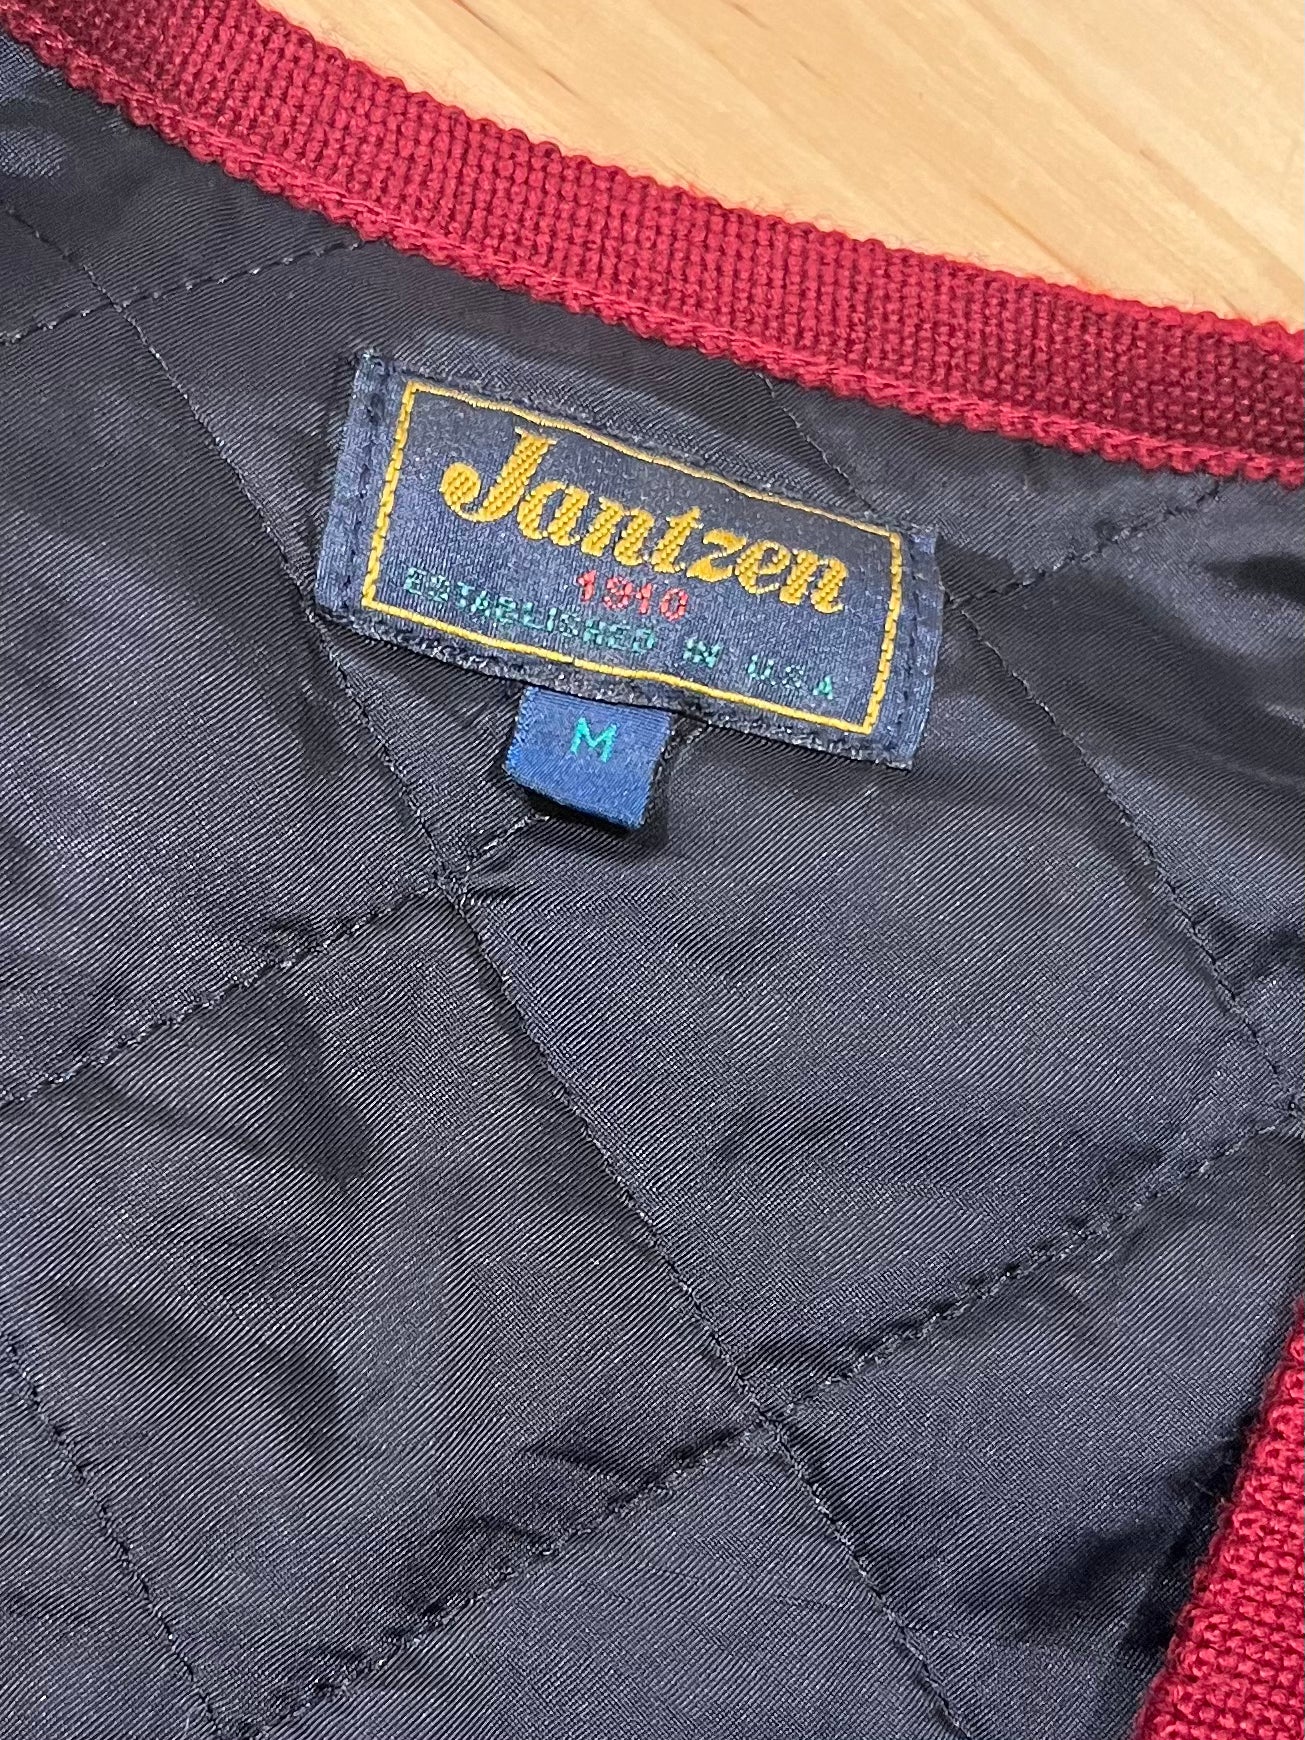 90s 'Jantzen' Knit Vest / Medium